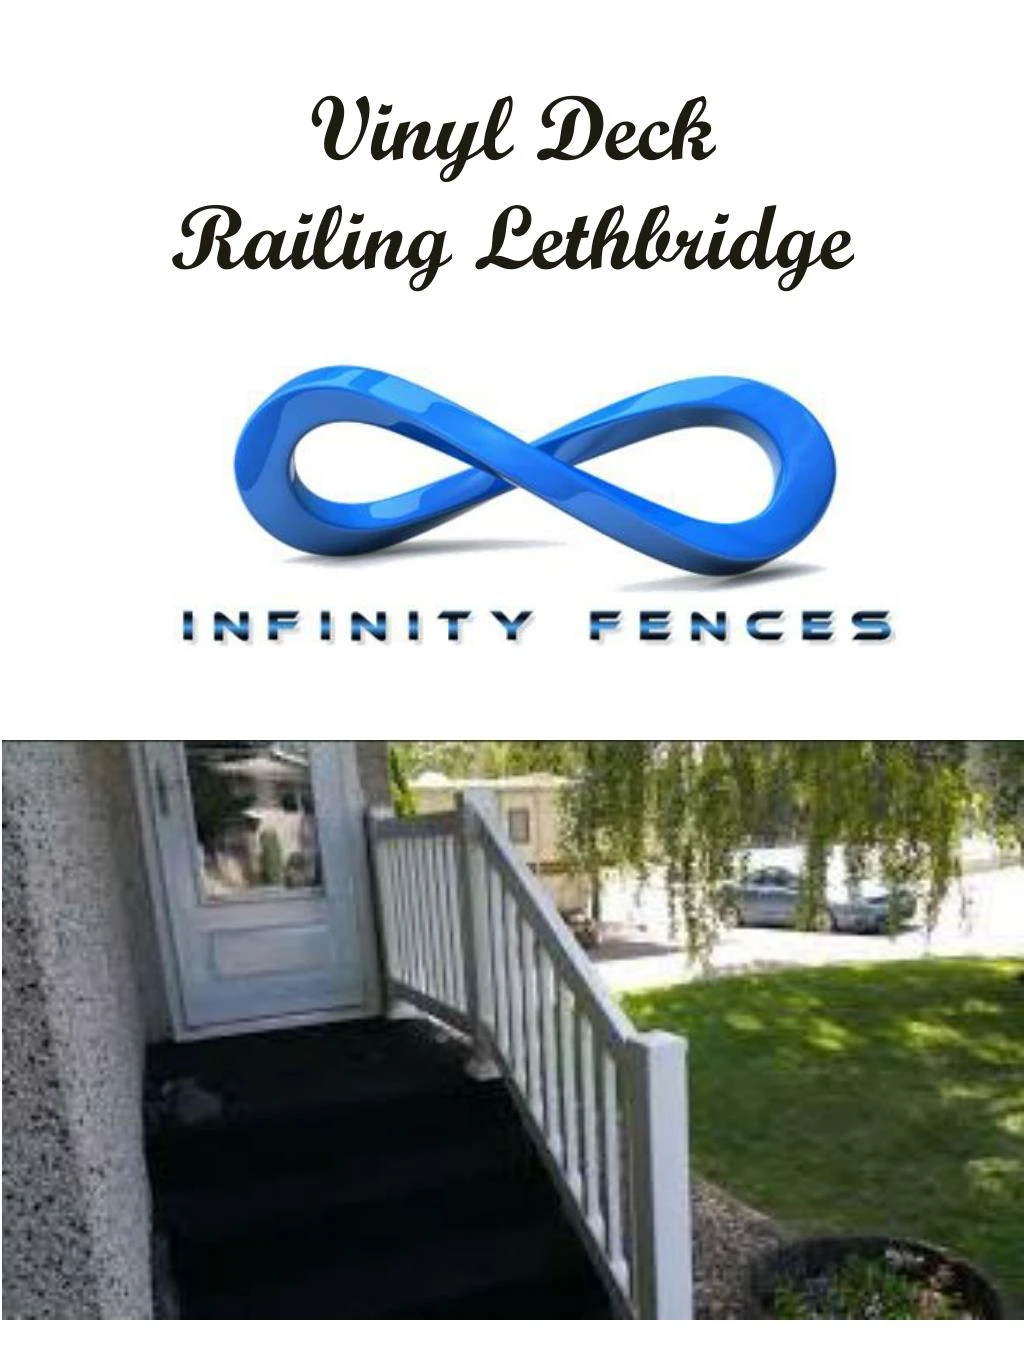 vinyl deck railing lethbridge